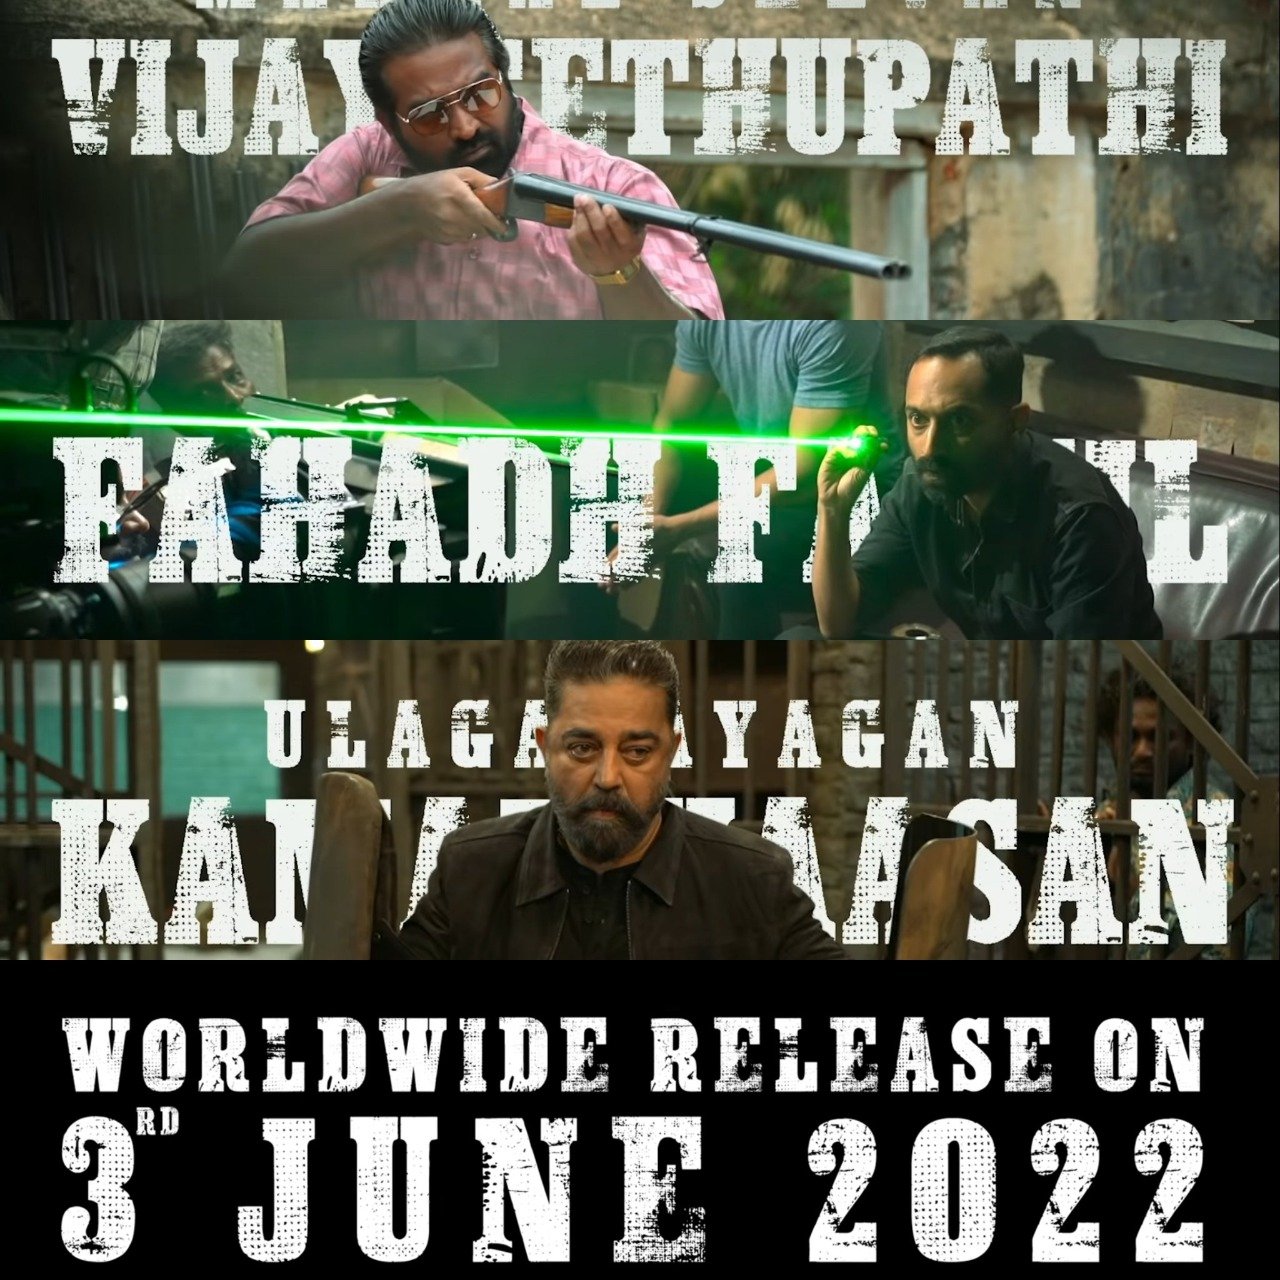 Kamal Haasan Vikram Movie Trailer at Cannes Film Festival